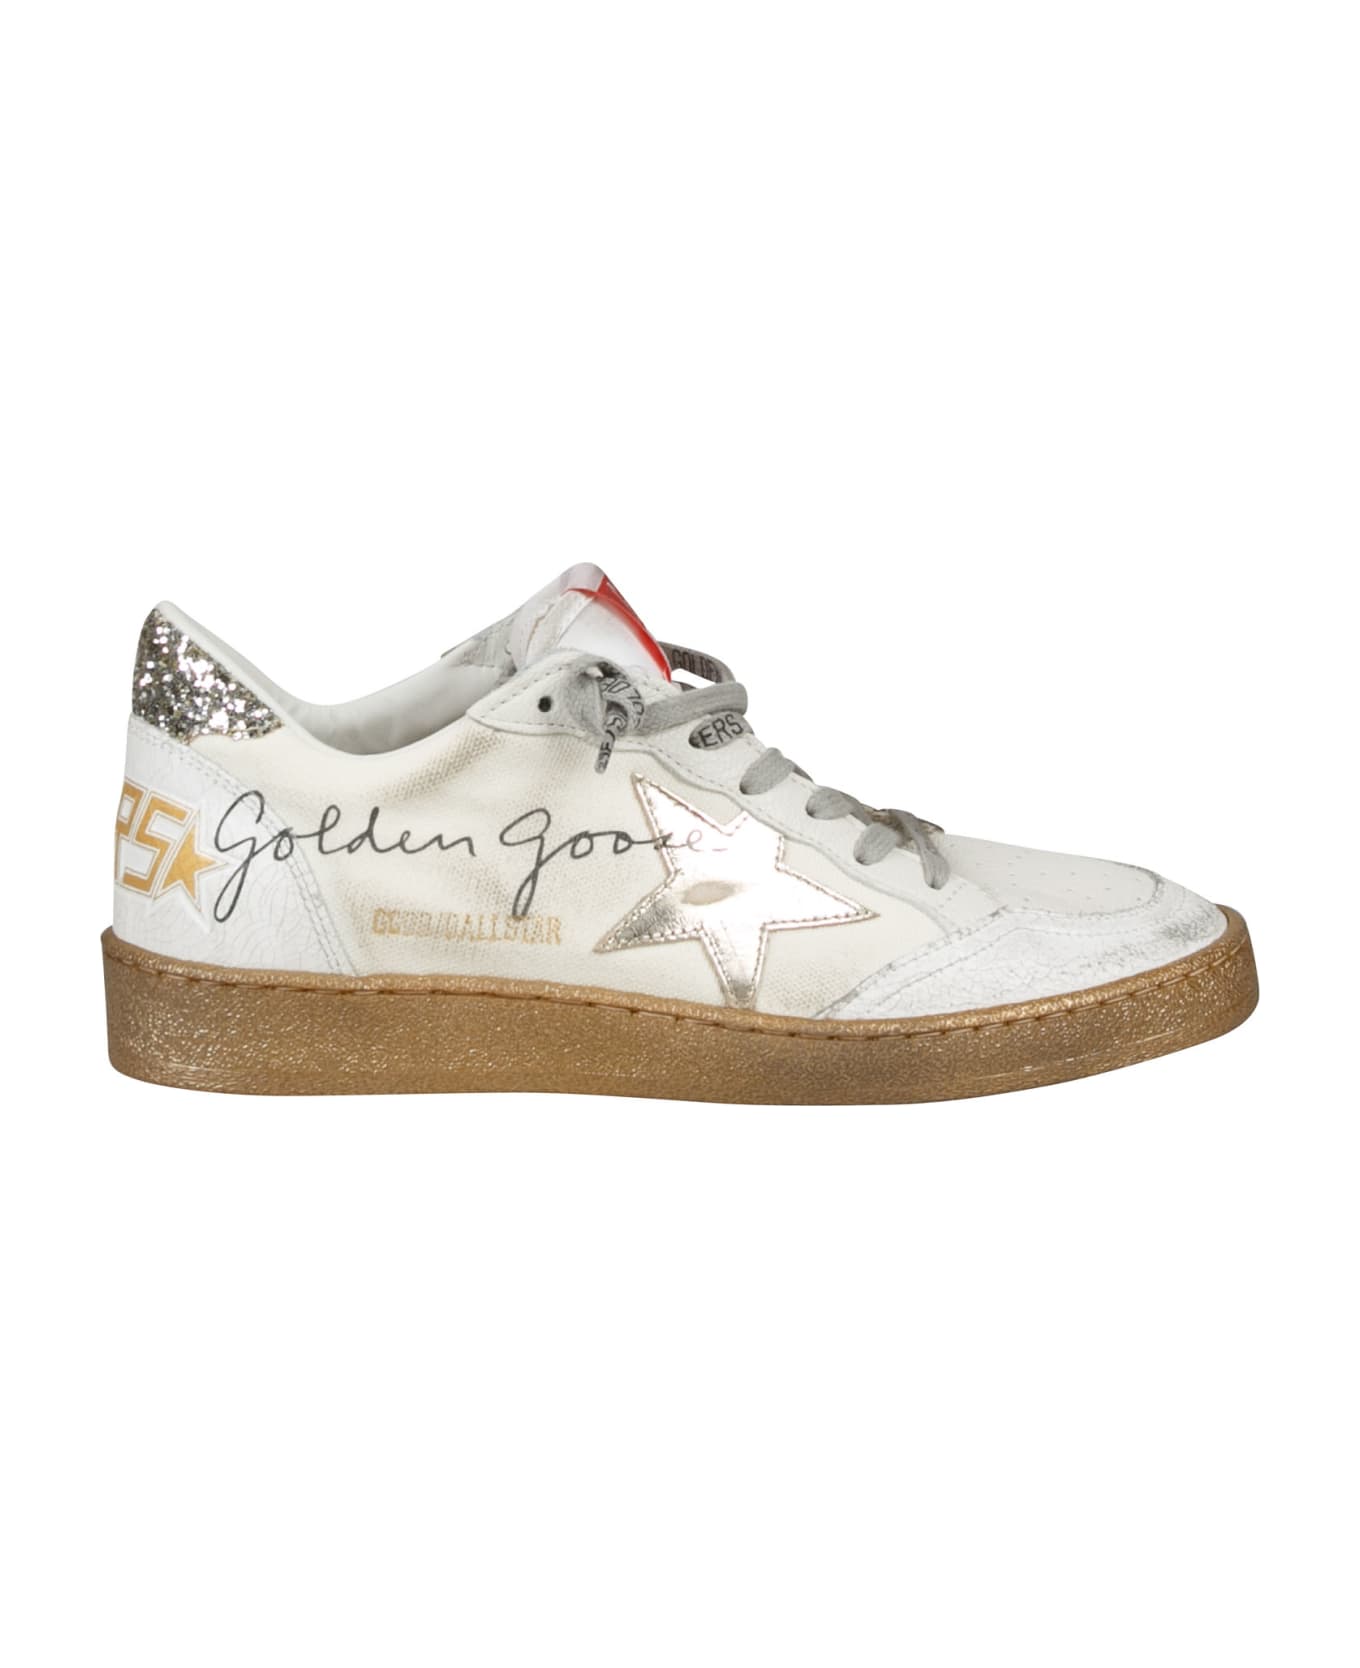 Golden Goose Ball Star Sneakers - Creamy White/Gold